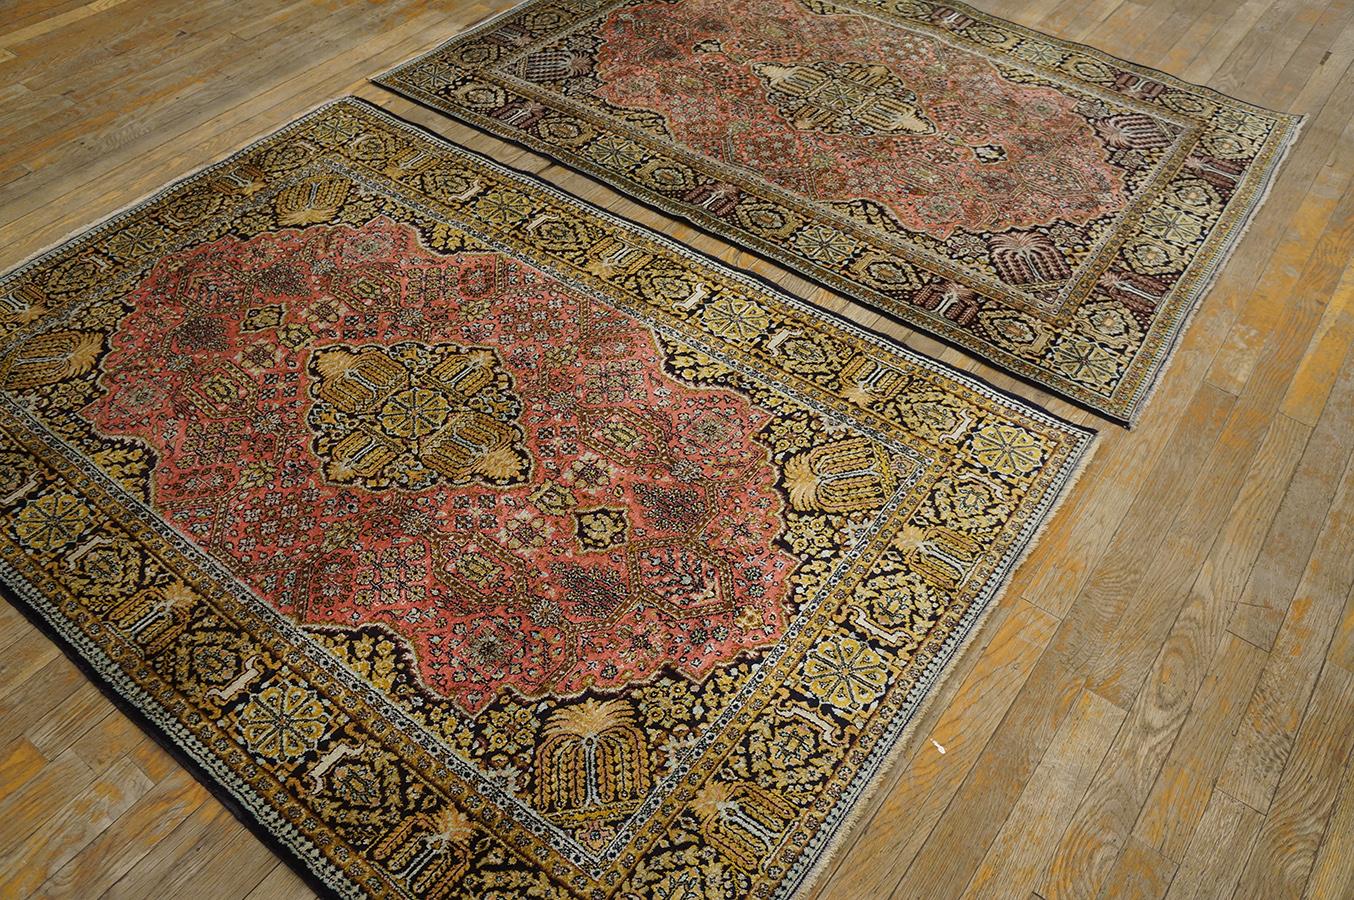 Pair of Mid 20th Century Persian Silk Qum Carpets (3' 7'' x 5' 2'' - 110 x 158) For Sale 2